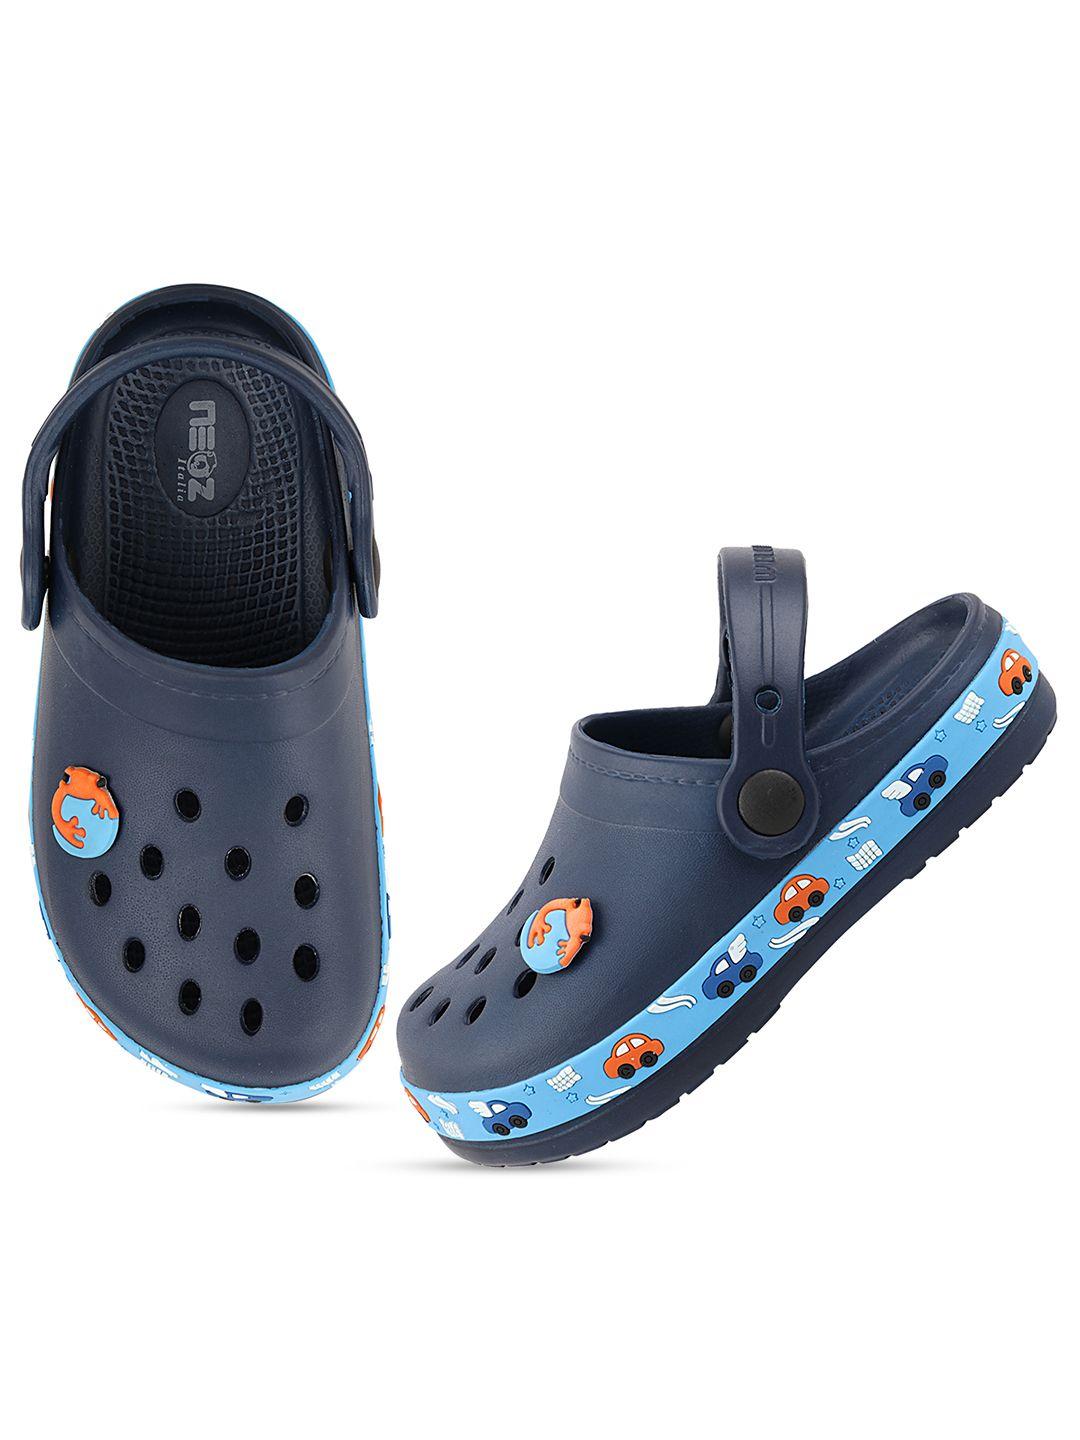 neoz boys navy blue & orange rubber clogs